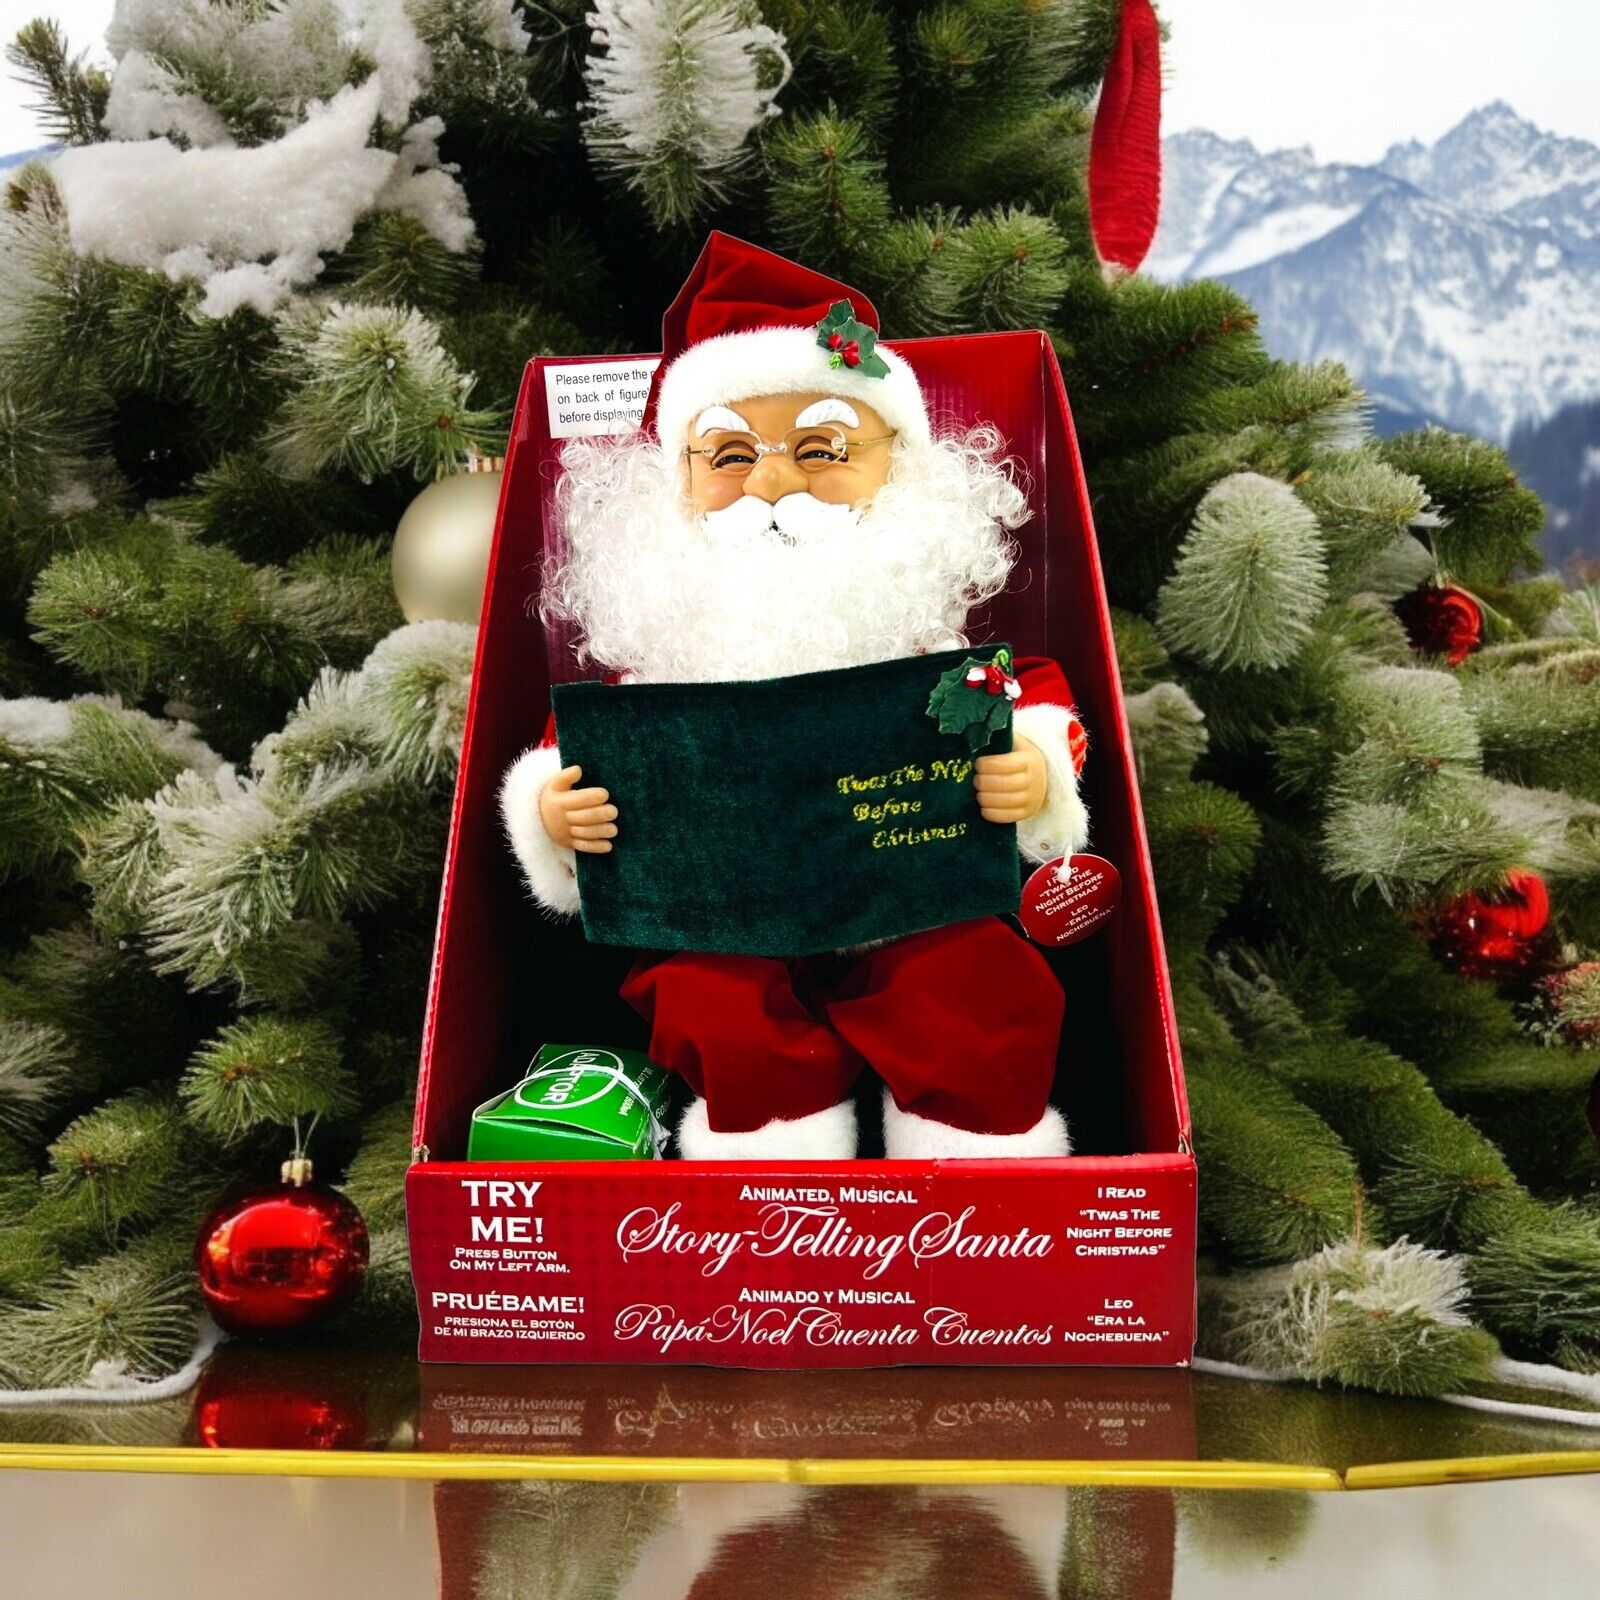 2005 Christmas International Story Telling Musical Santa Claus Vintage NEW